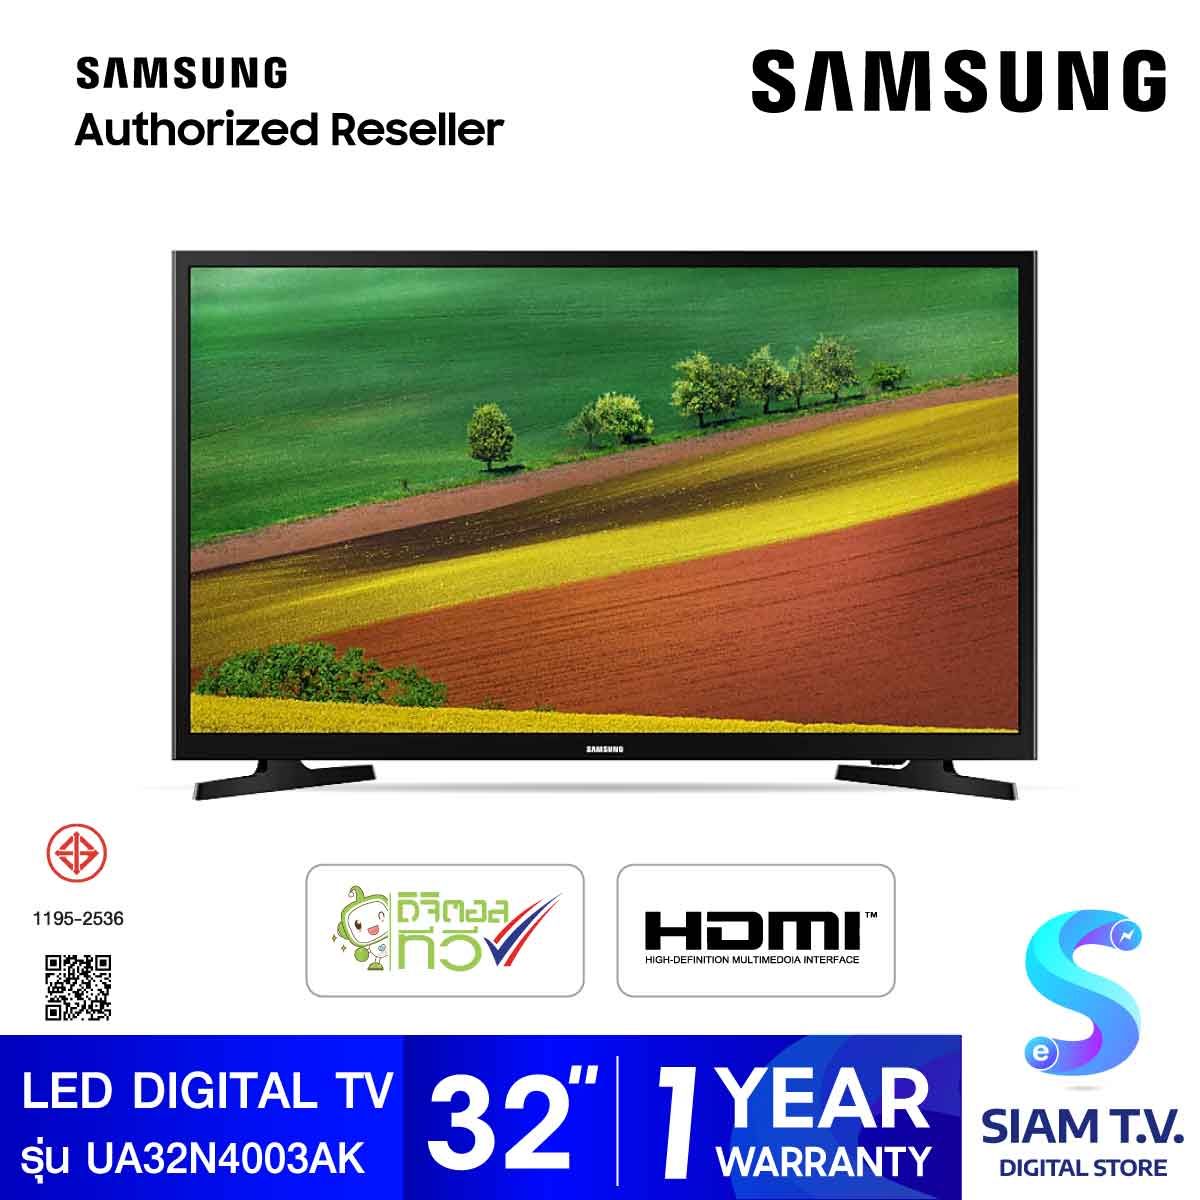 SAMSUNG LED Digital TV รุ่น UA32N4003AK ดิจิตอลทีวี ขนาด32 นิ้ว